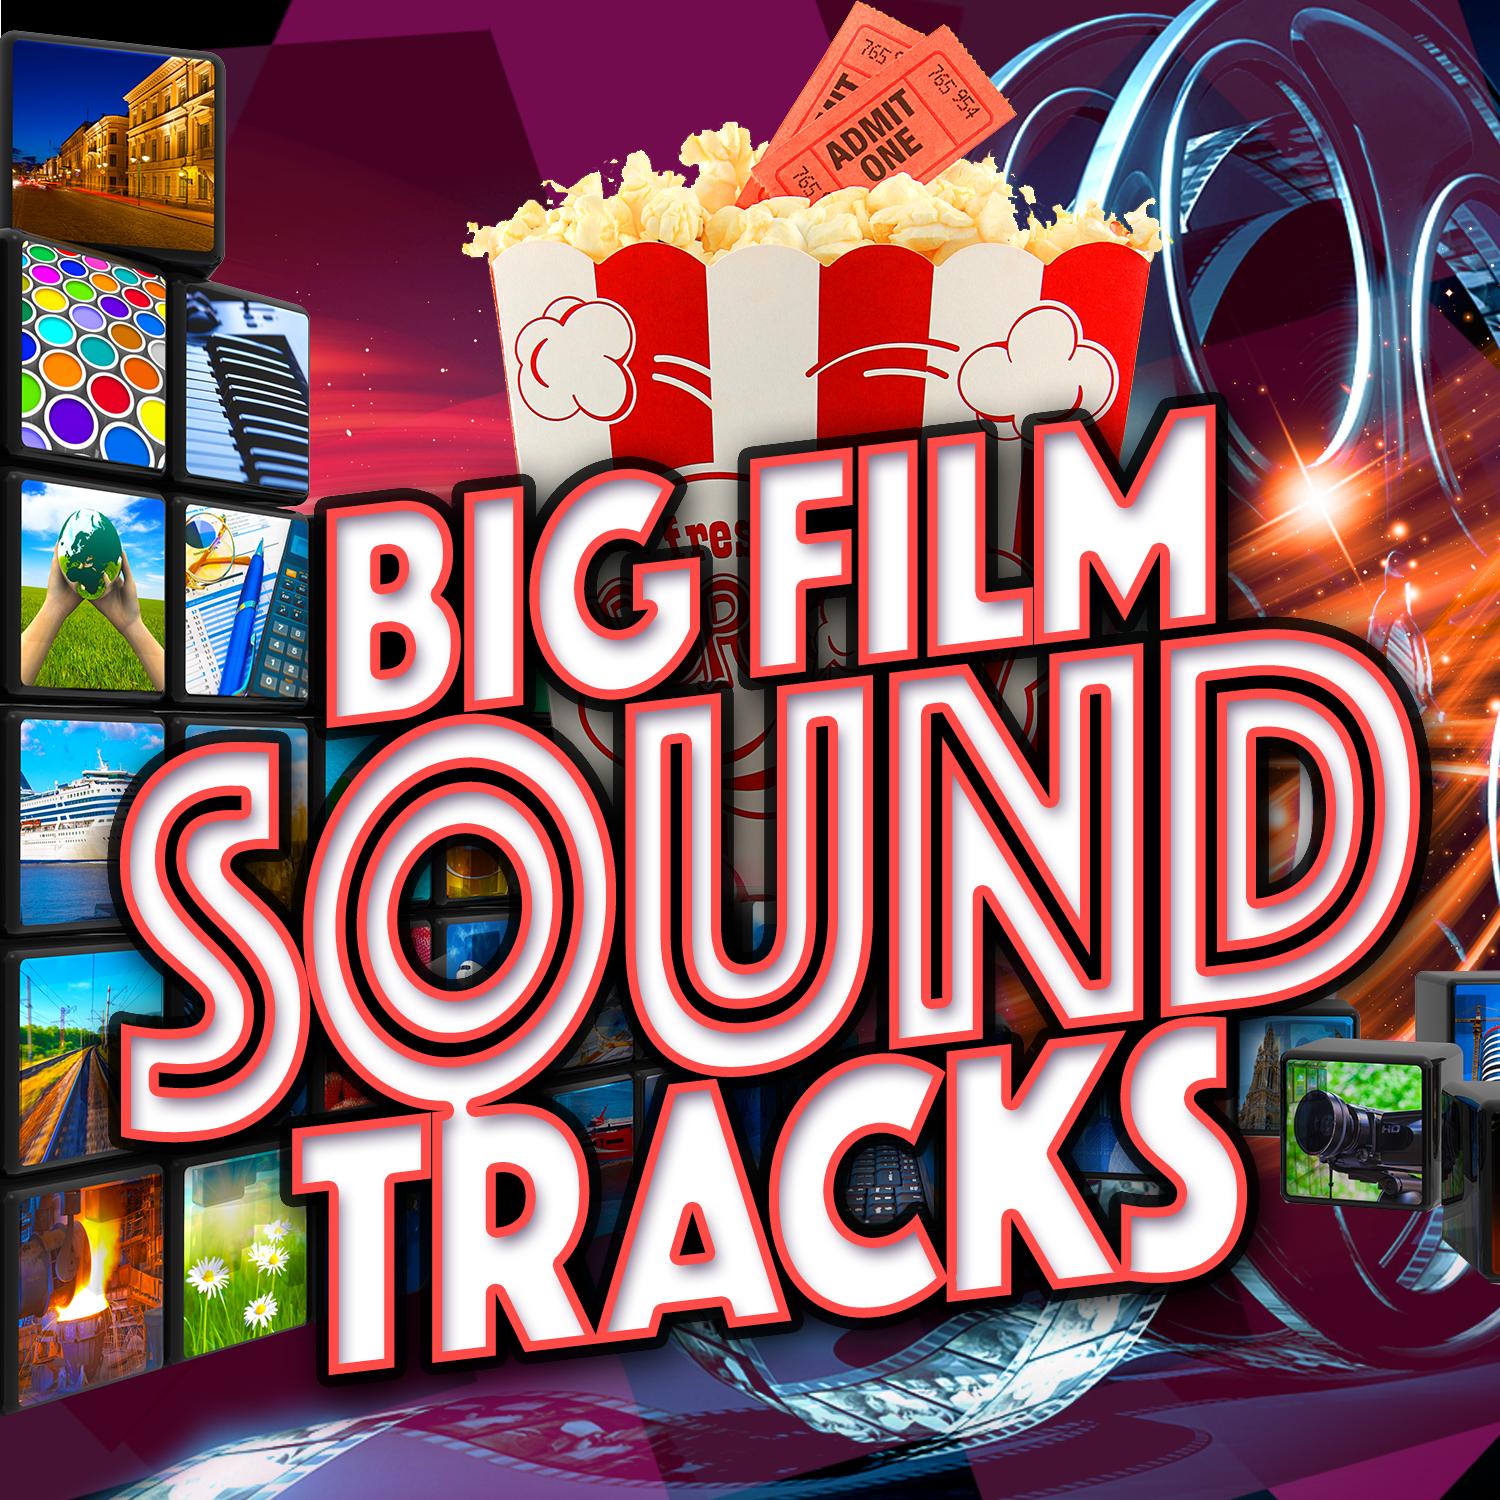 Big Film Soundtracks